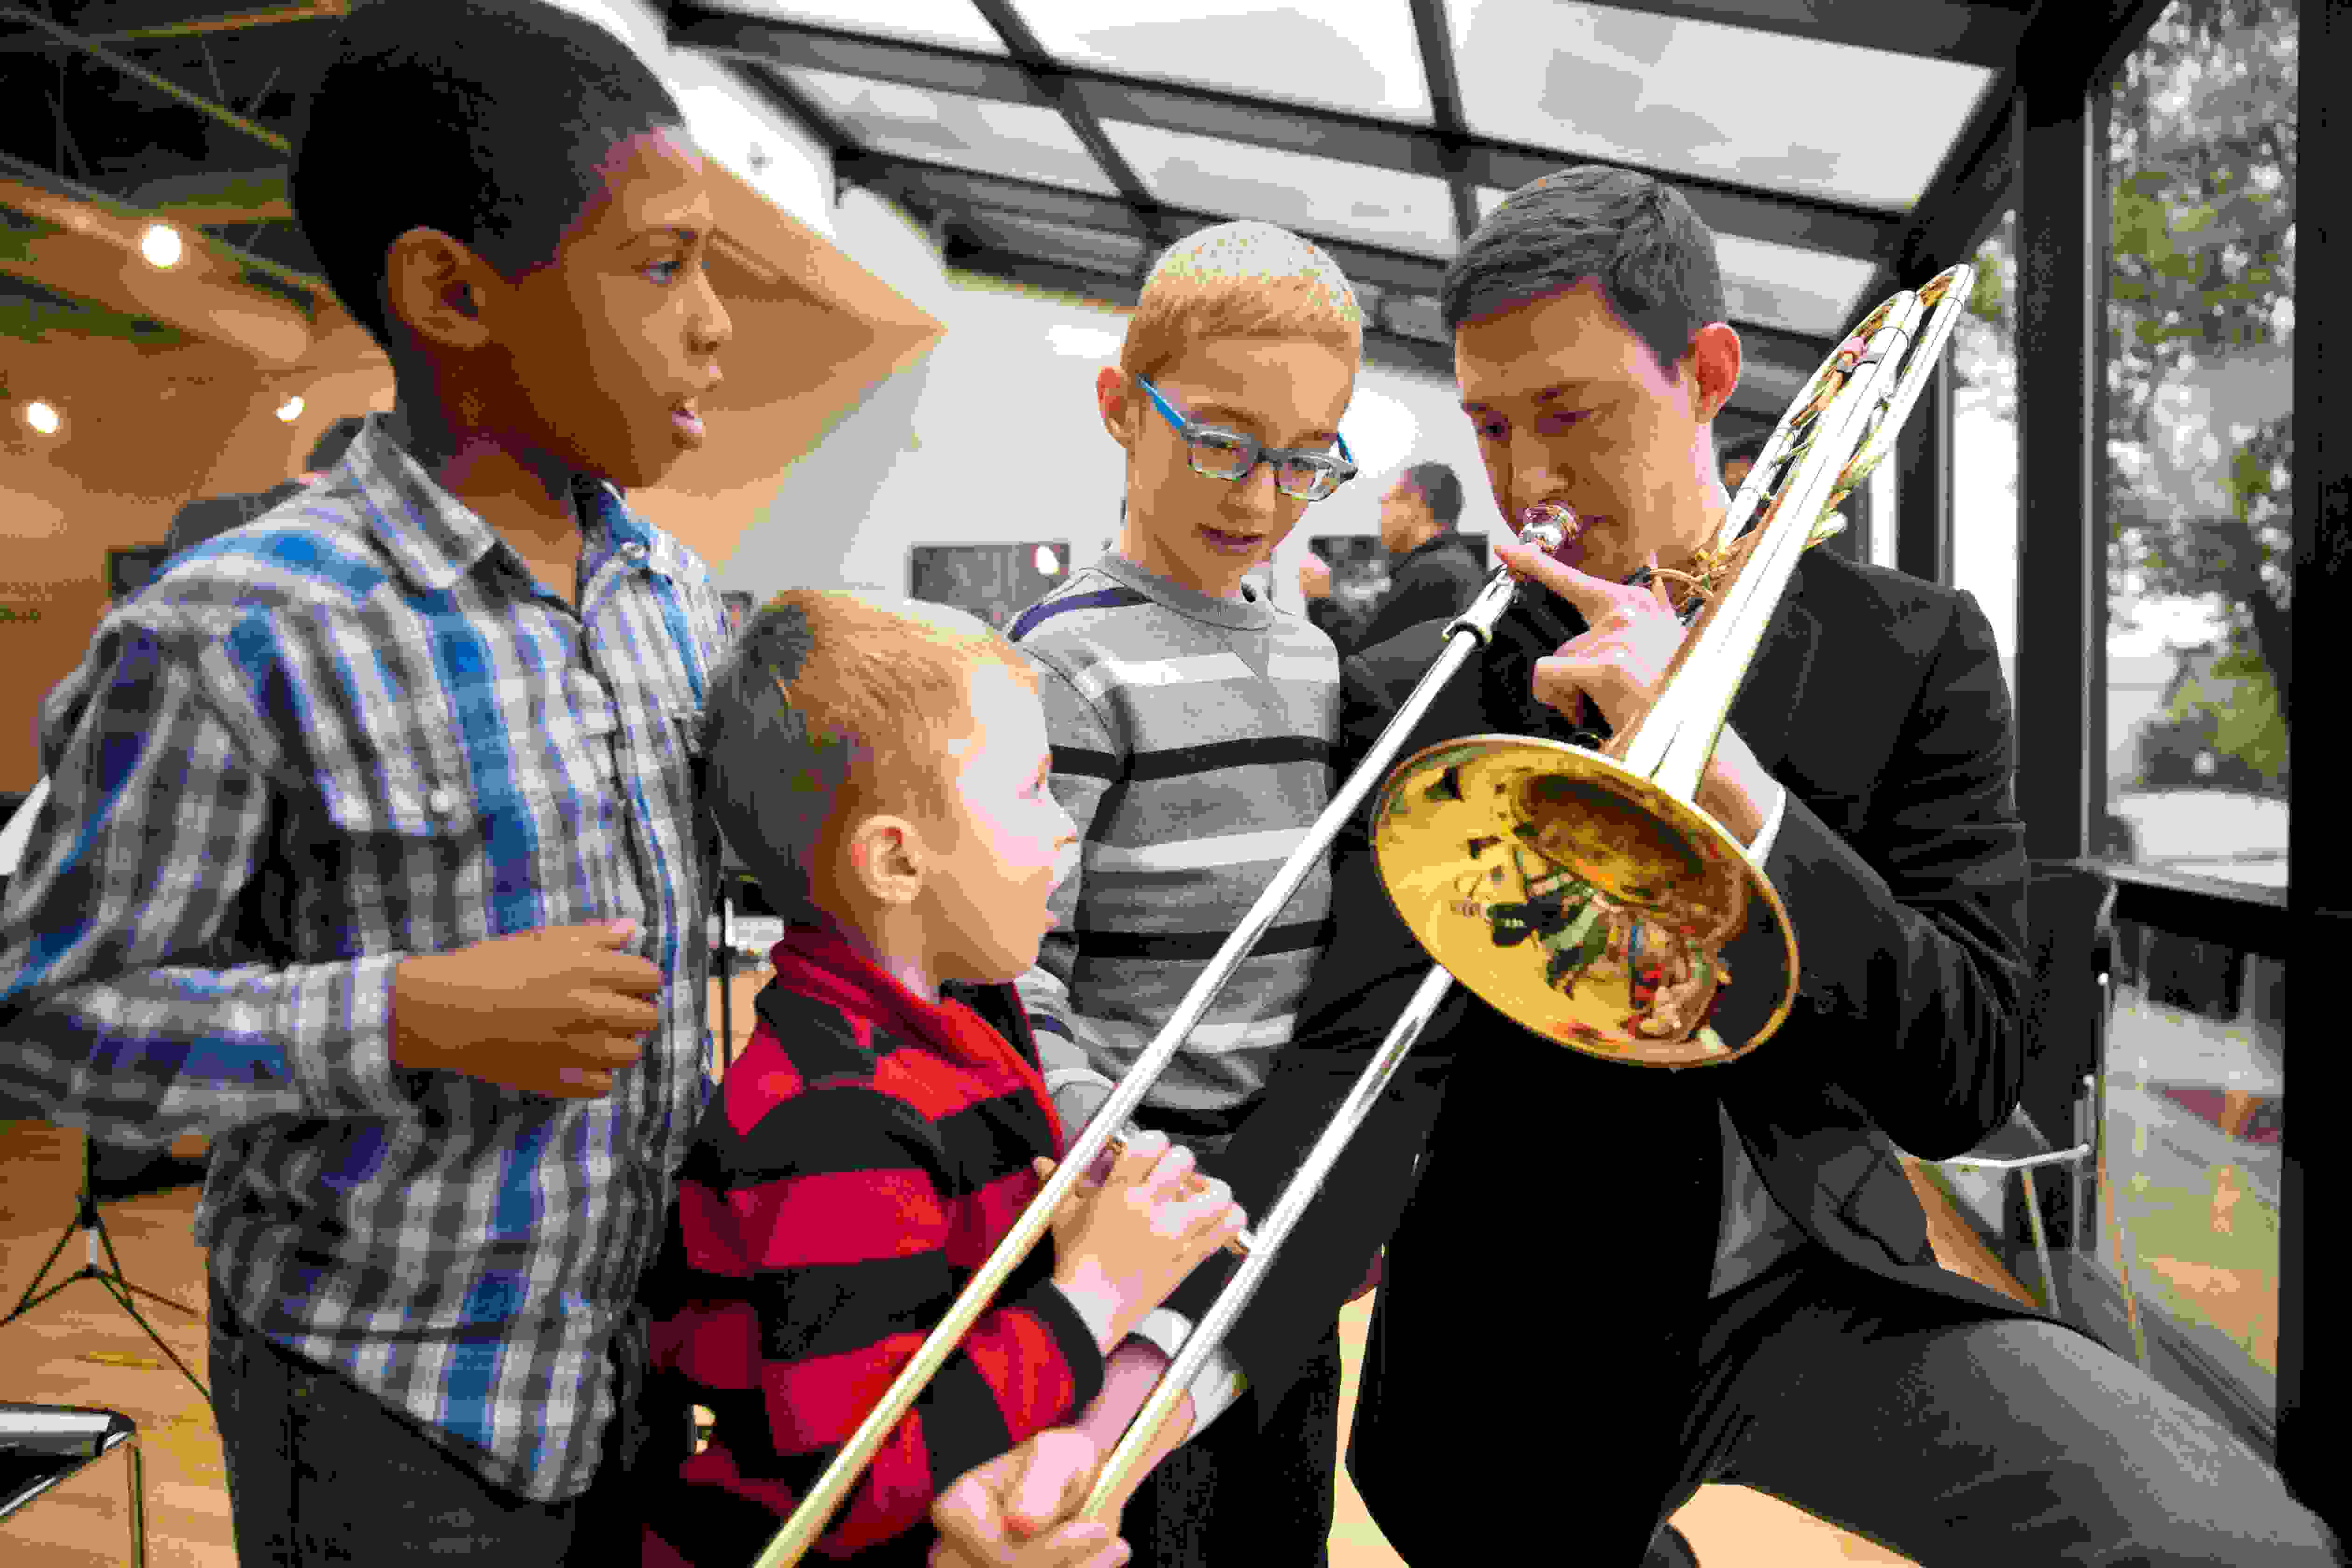 Civic Fellow trombone with kids